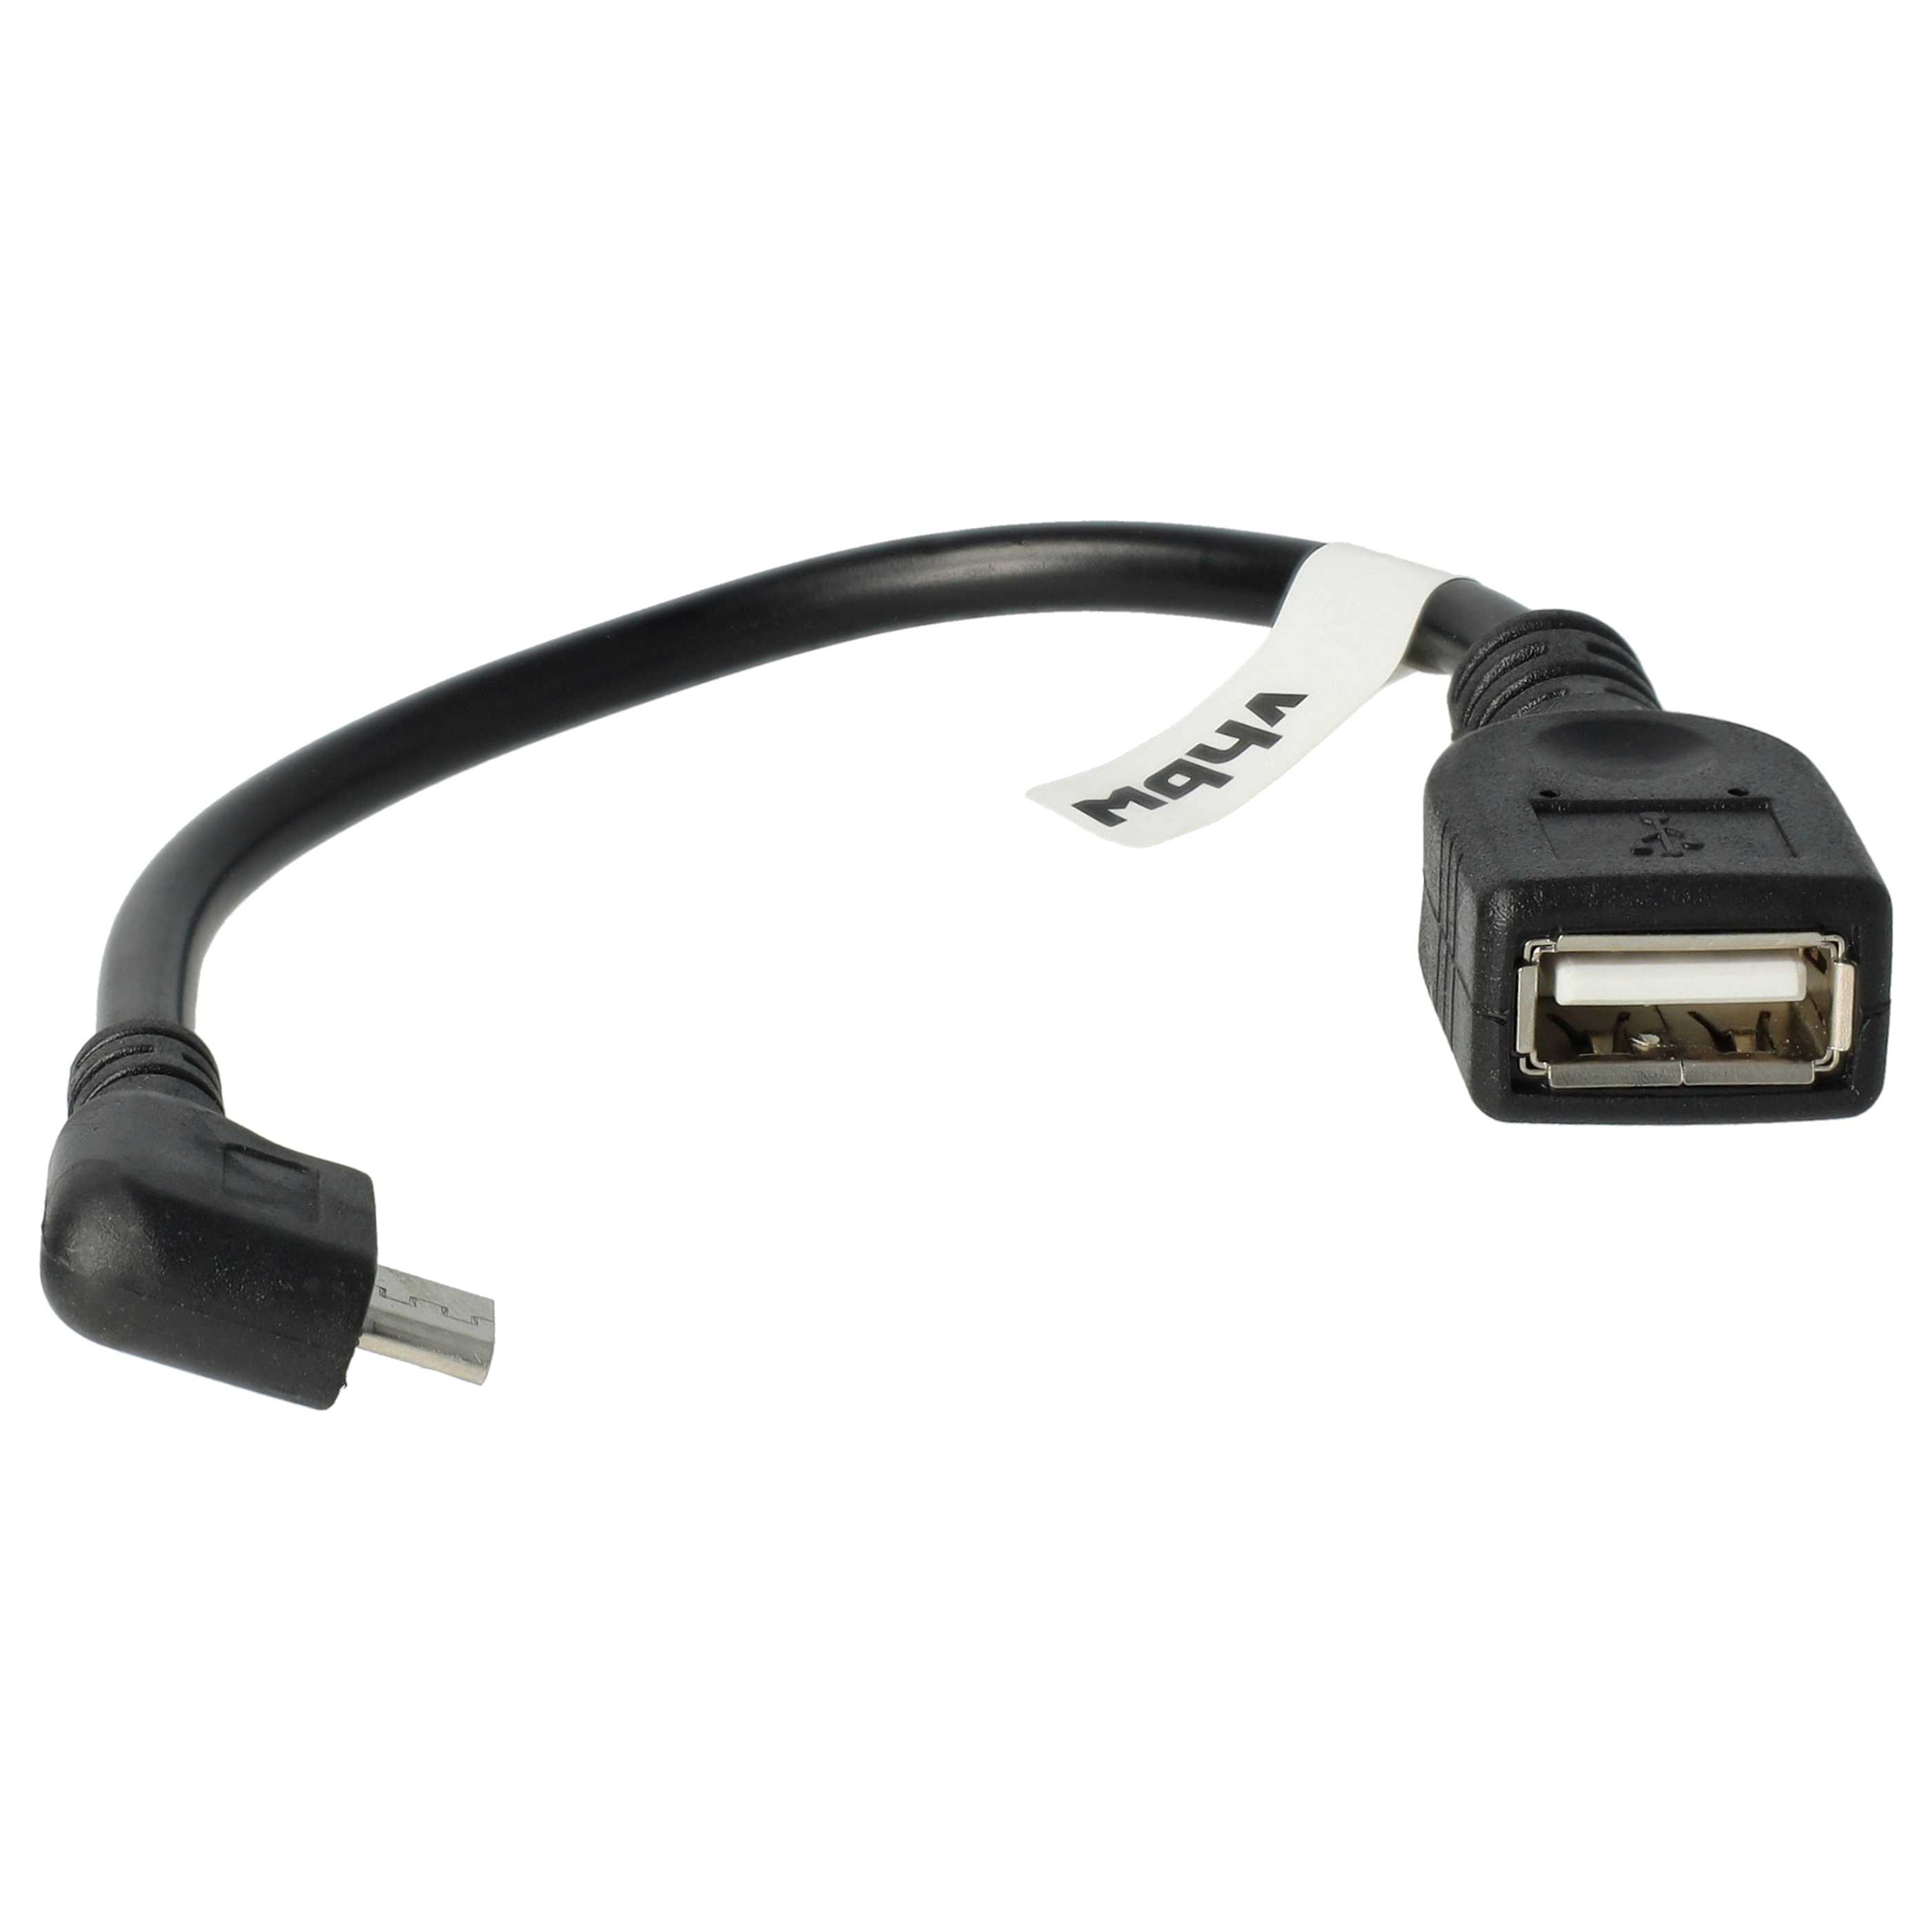 Adaptador OTG Micro-USB a USB (hembra) ángulo 90° para smartphones, tablets, computadora 